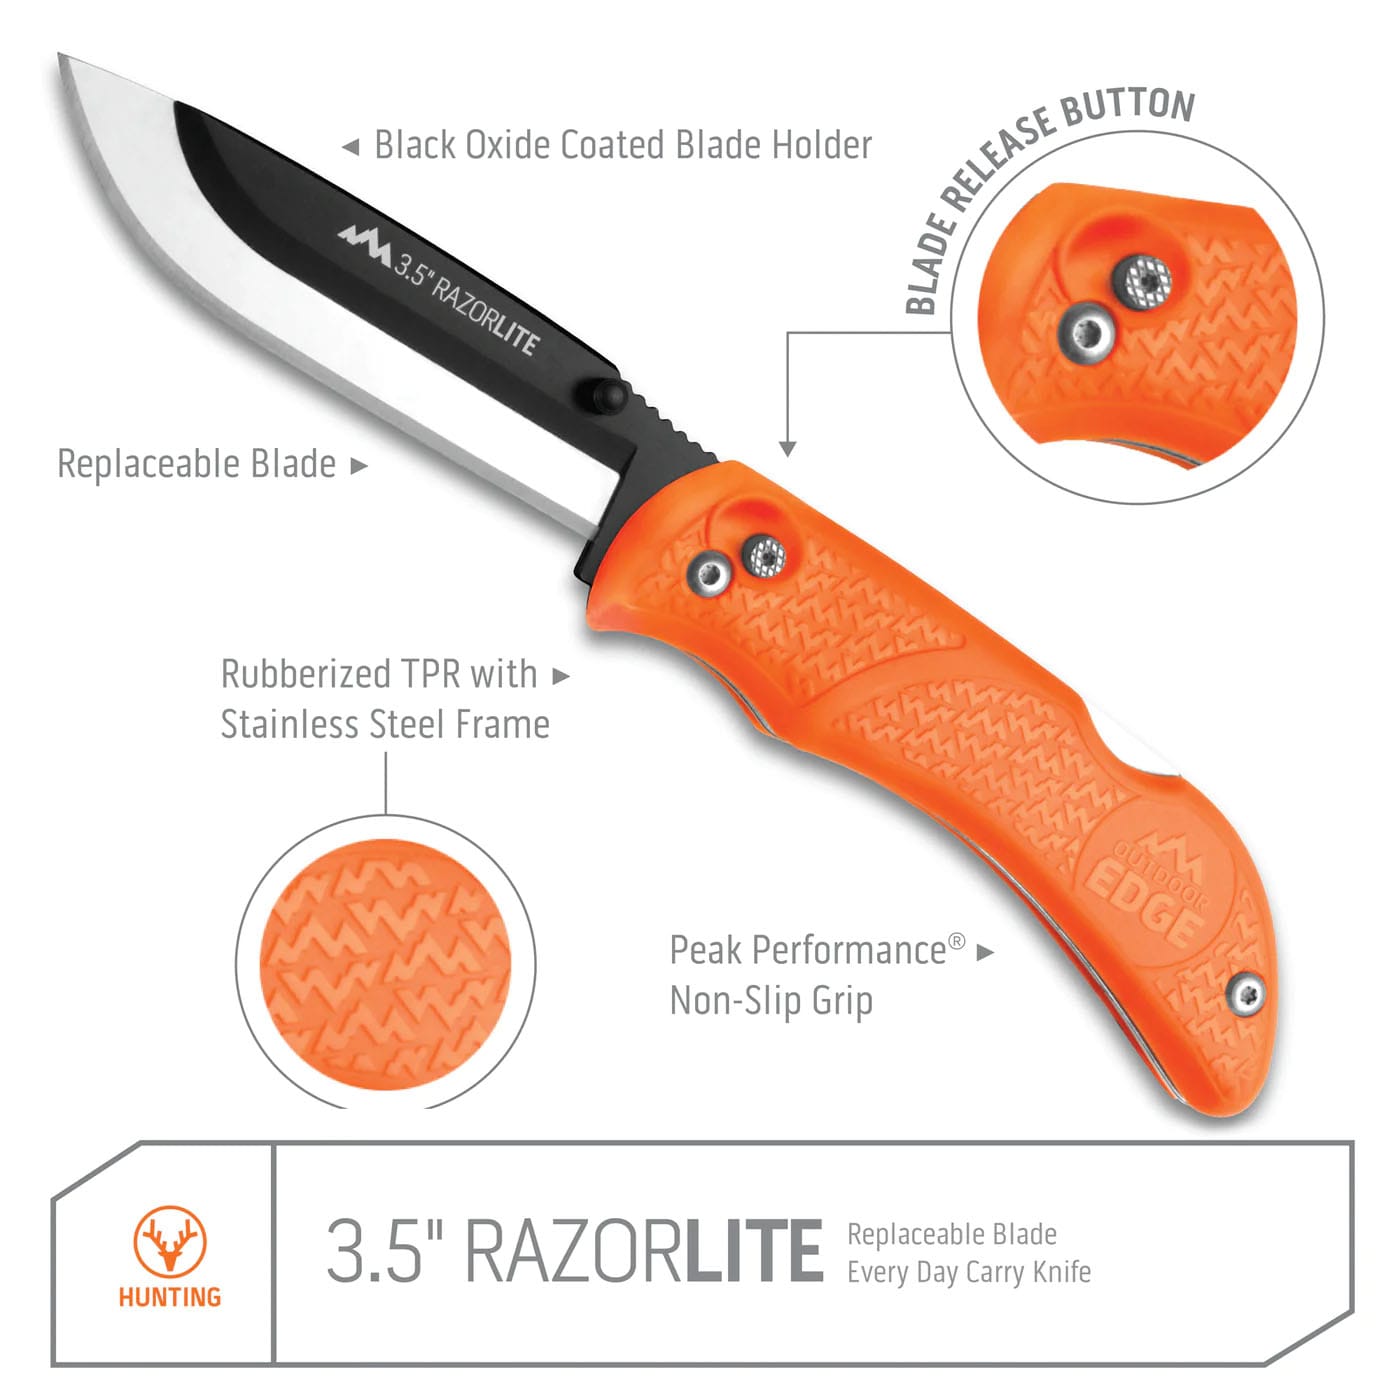 Outdoor Edge® RazorPro L 3.5” Replaceable Blade Knife